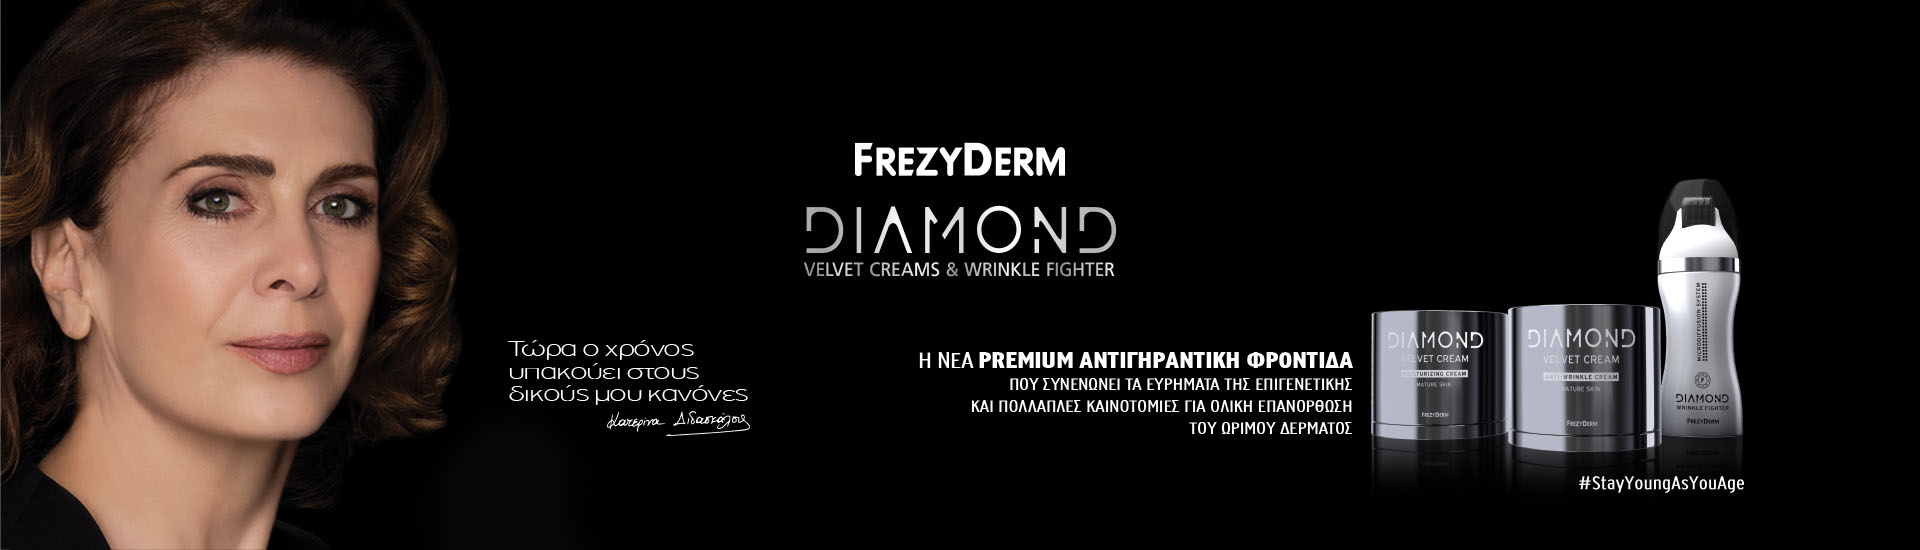 Frezyderm - Diamond